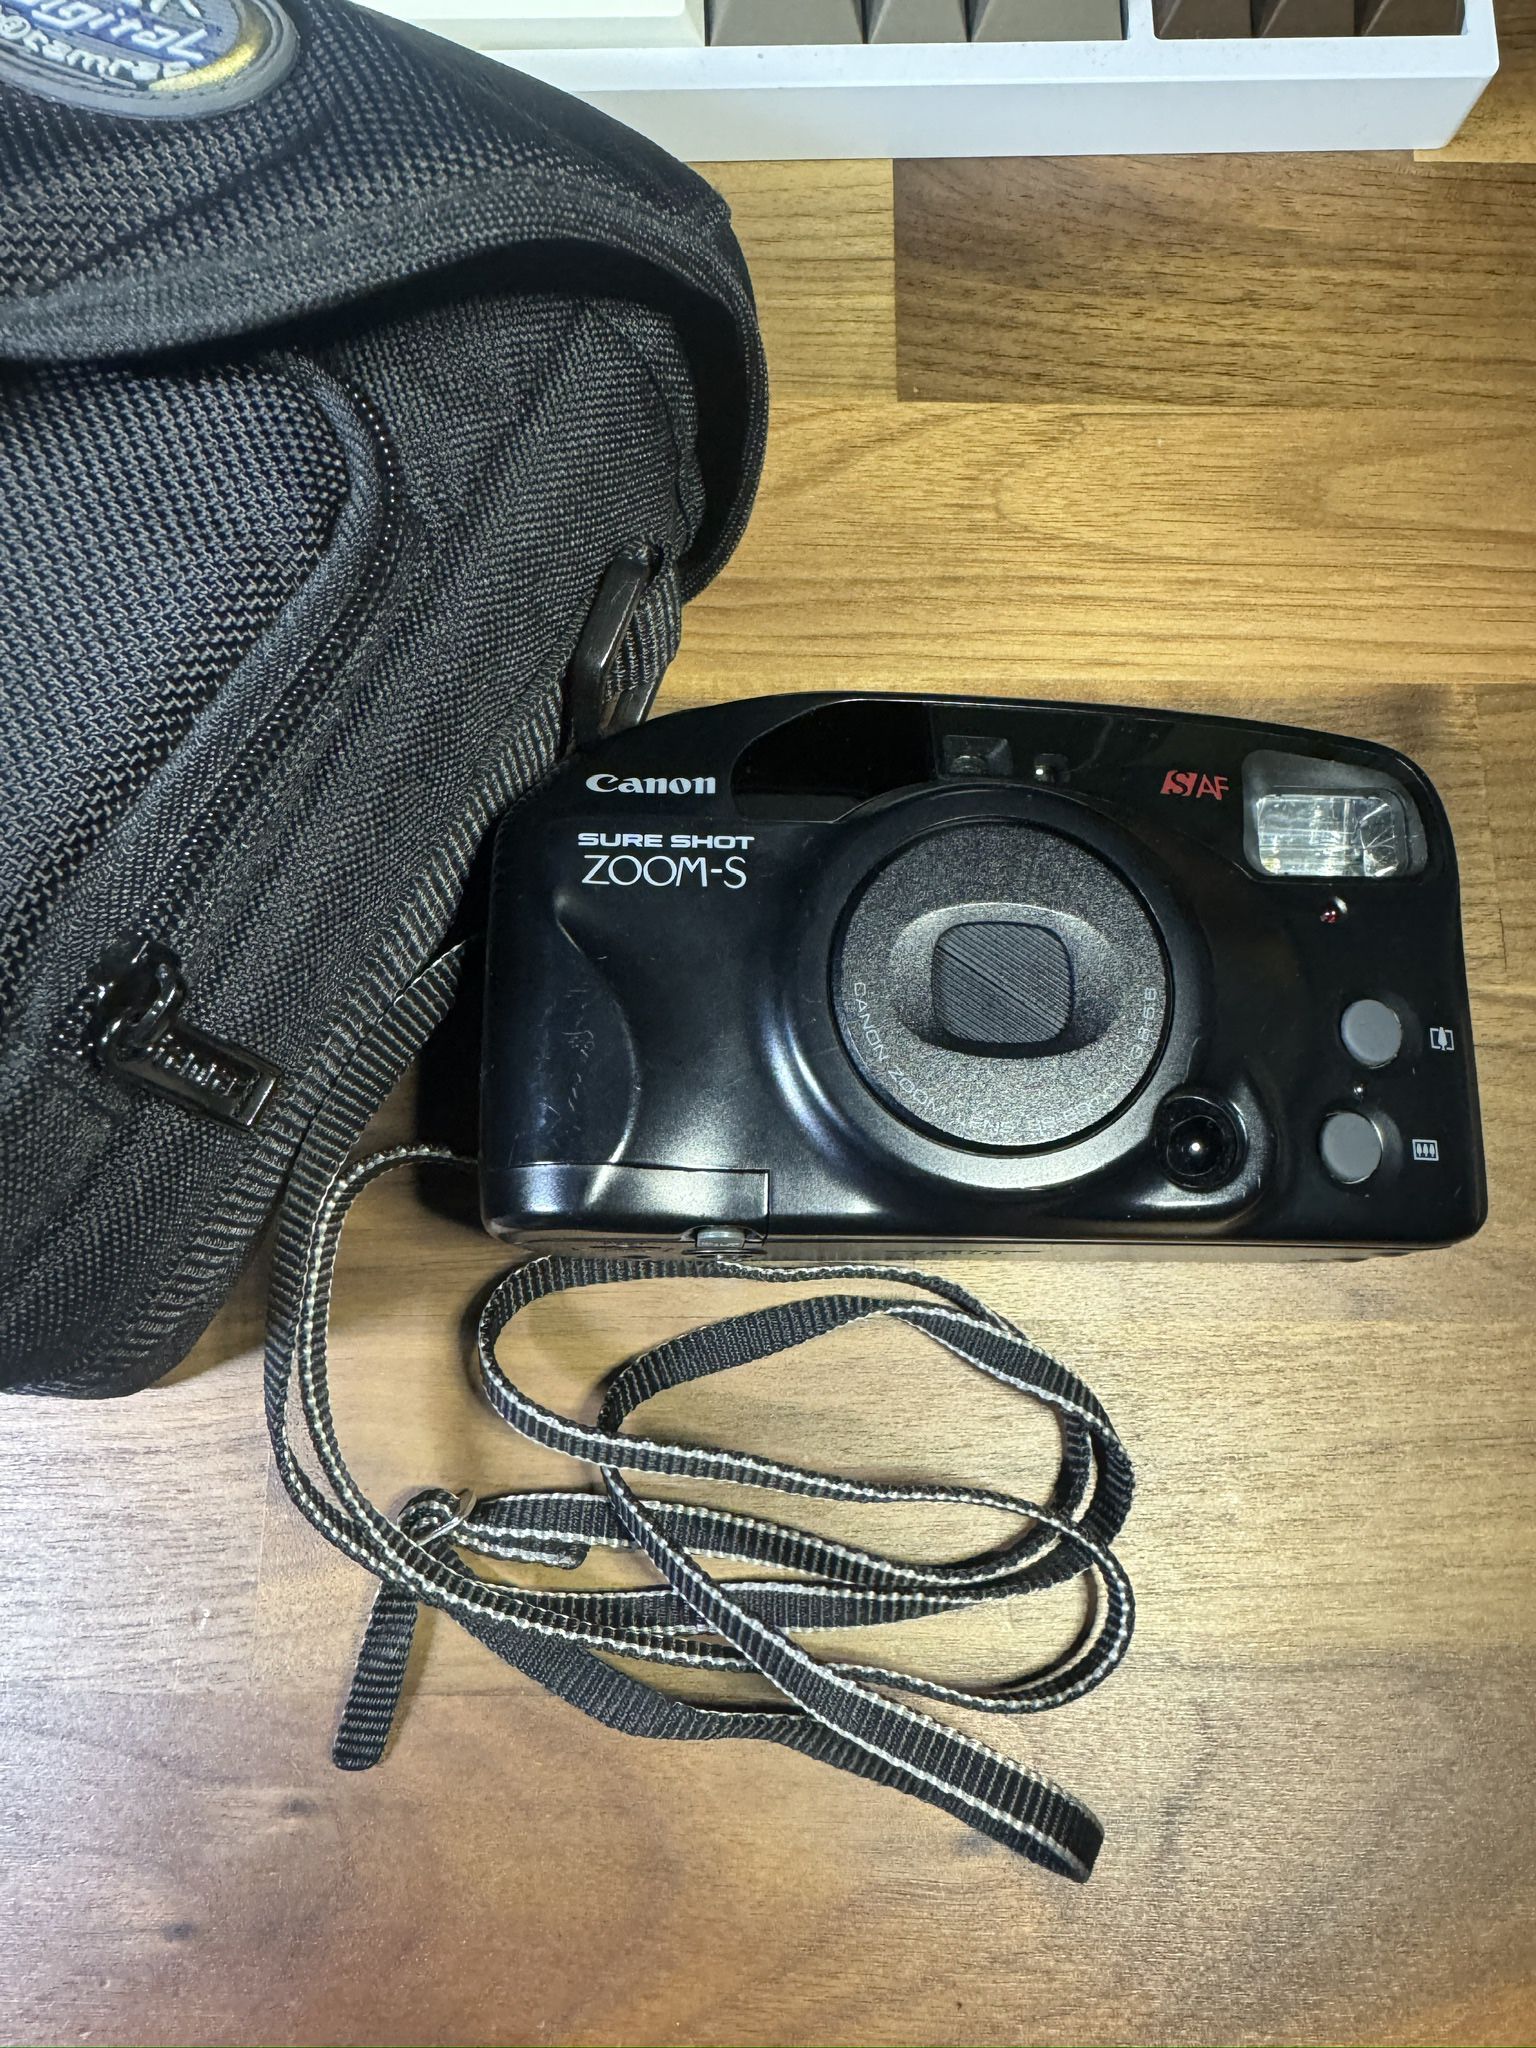 Canon Sureshot Zoom-S 35mm Film Camera